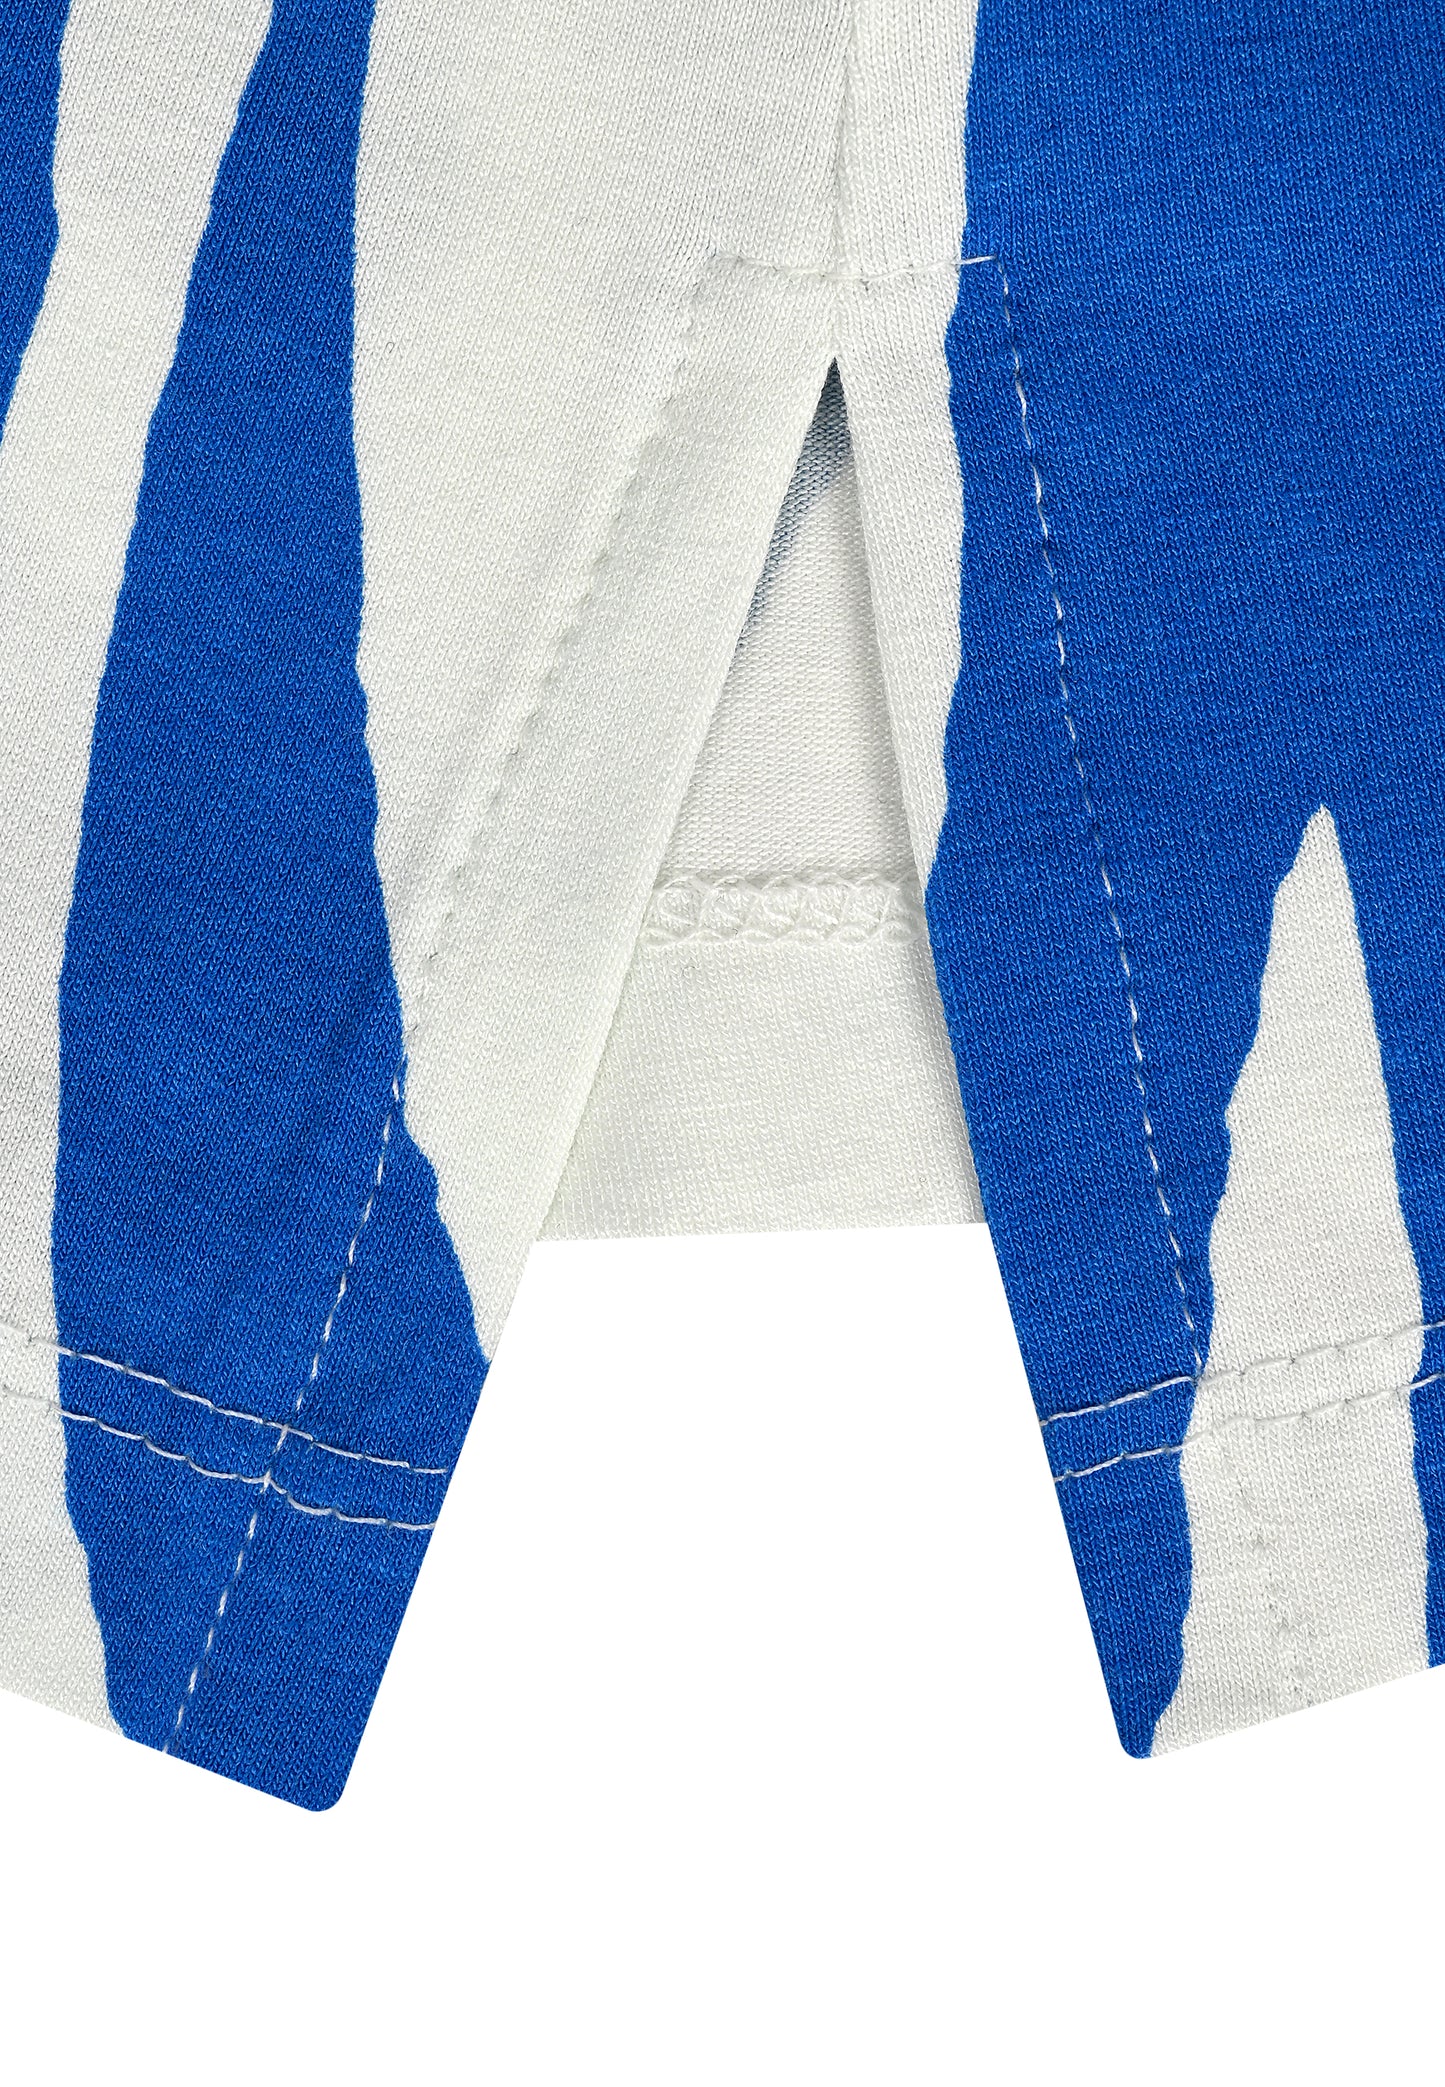 E24184 Shirt Bicolor - 10/blue-white